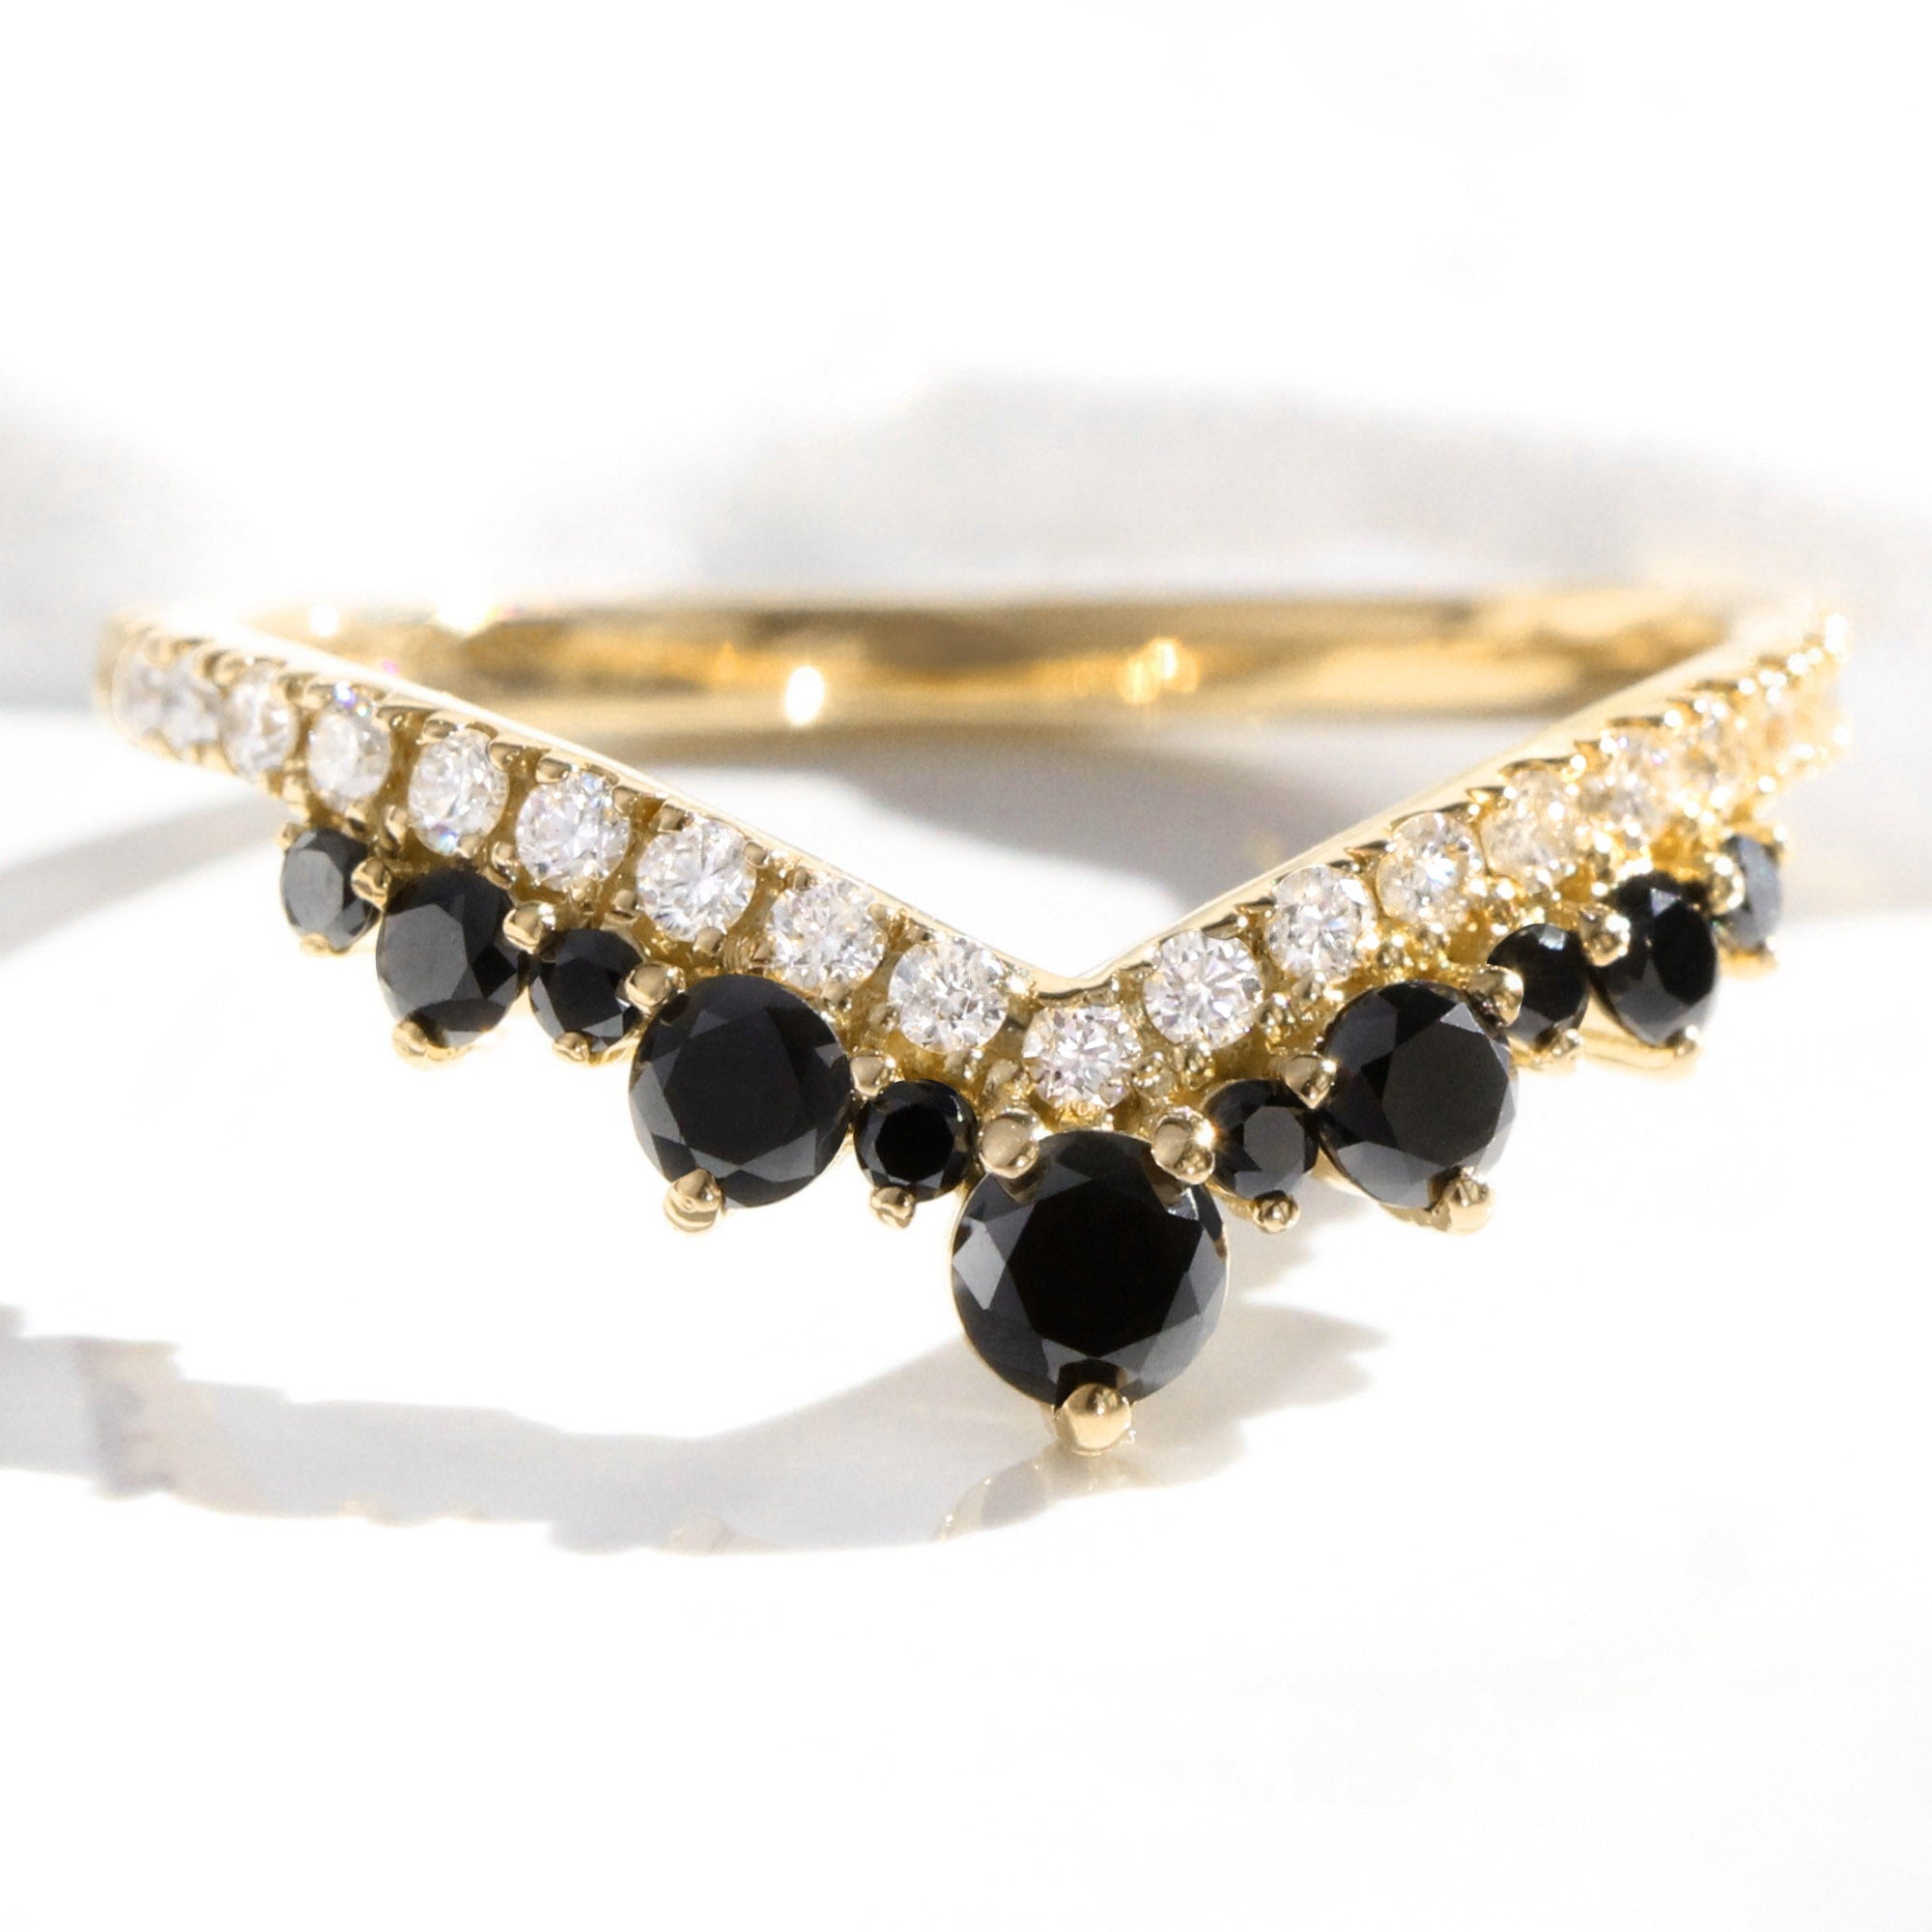 White and black diamond wedding ring yellow gold curved V diamond band la more design jewelry